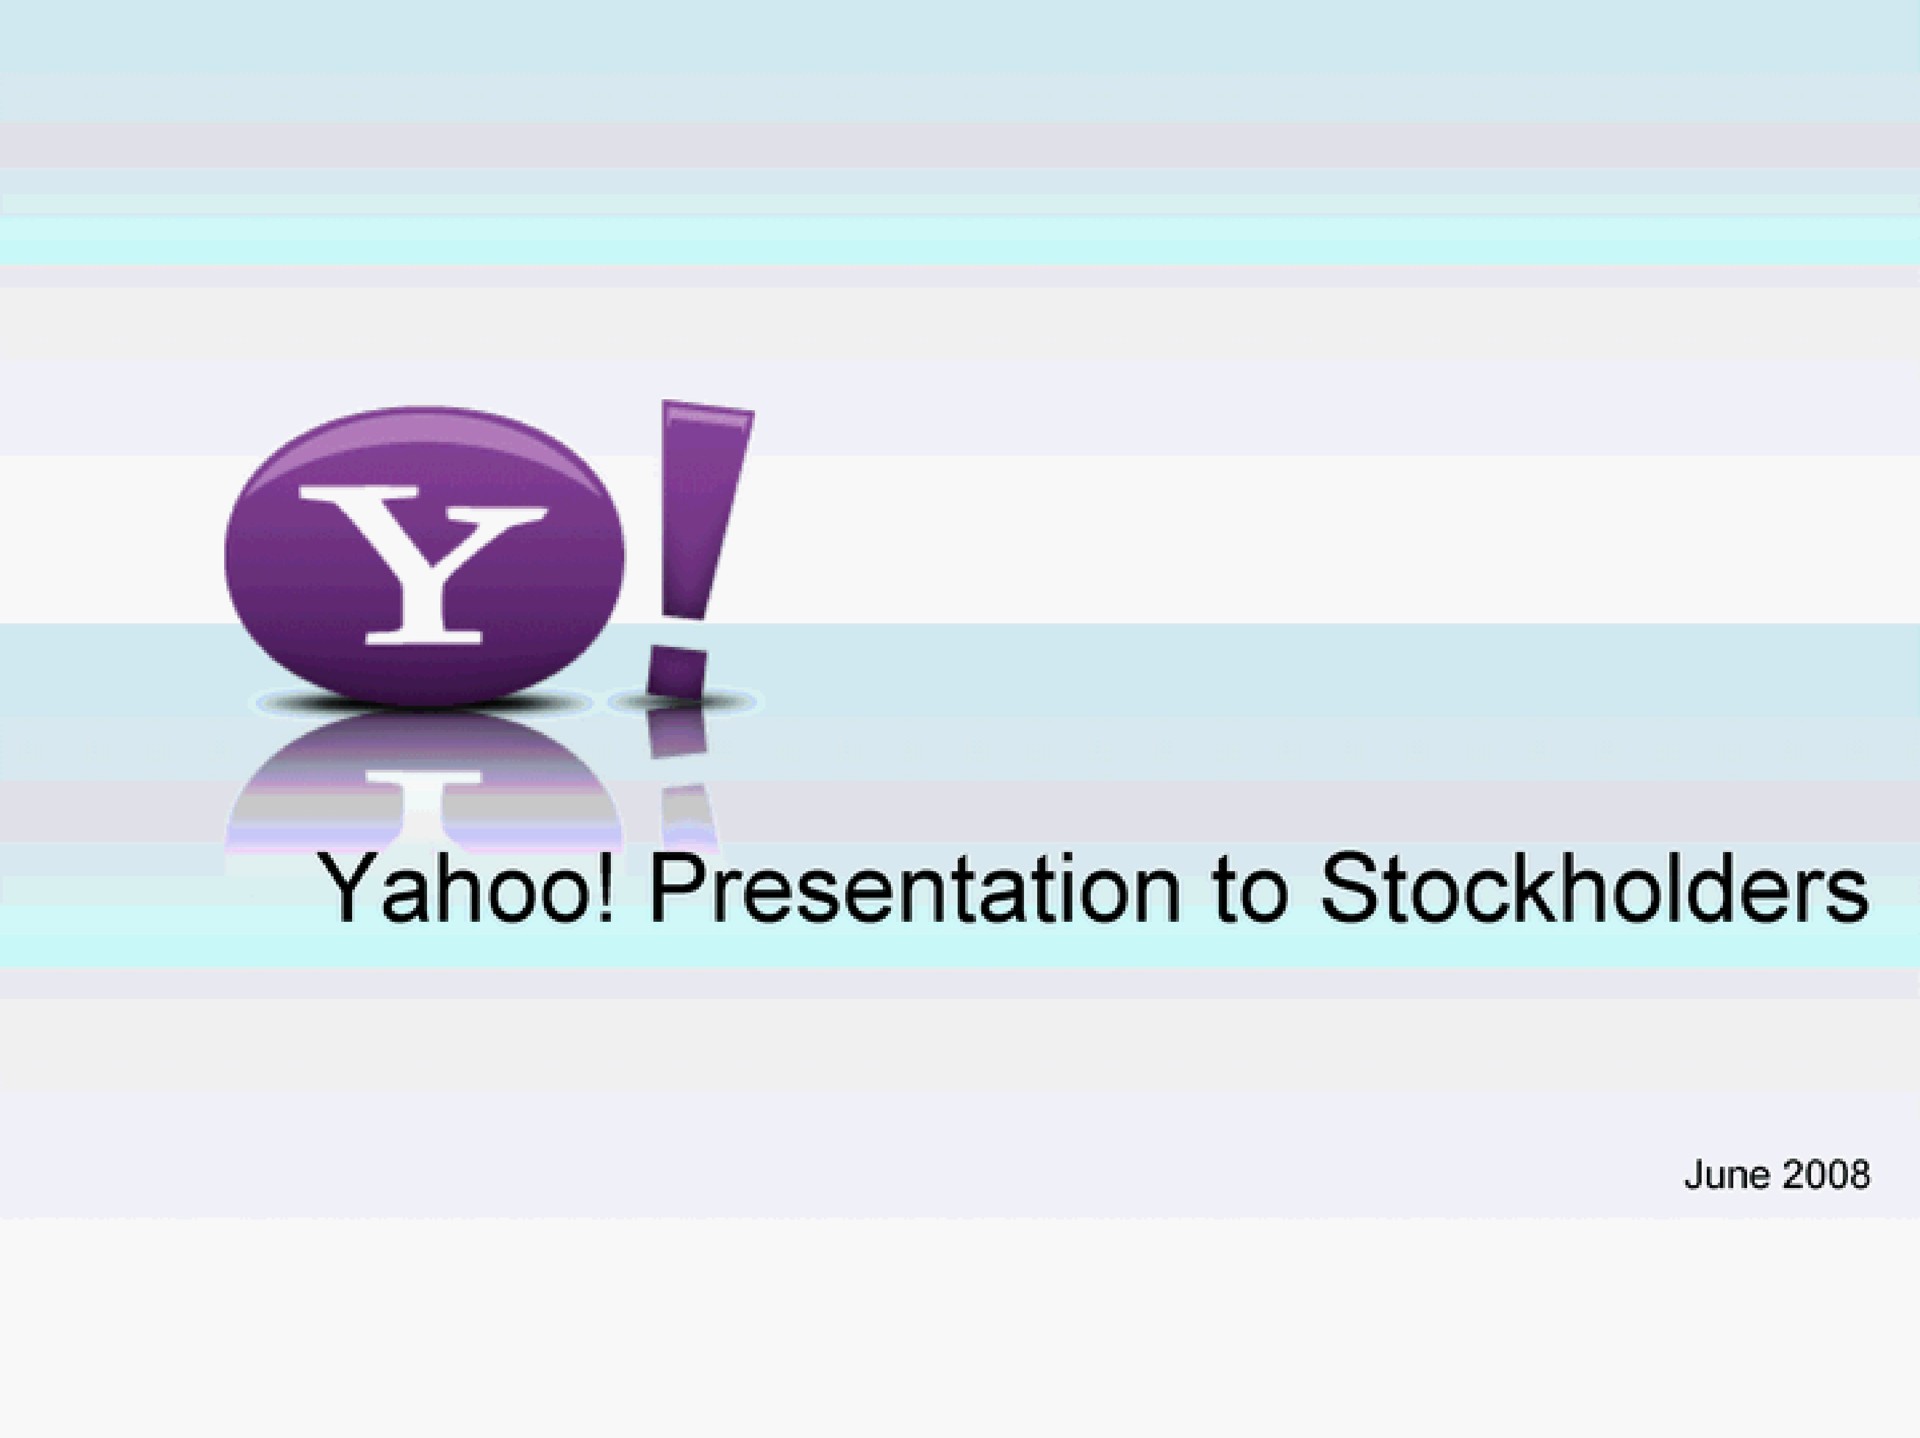 yahoo presentation to stockholders | Yahoo